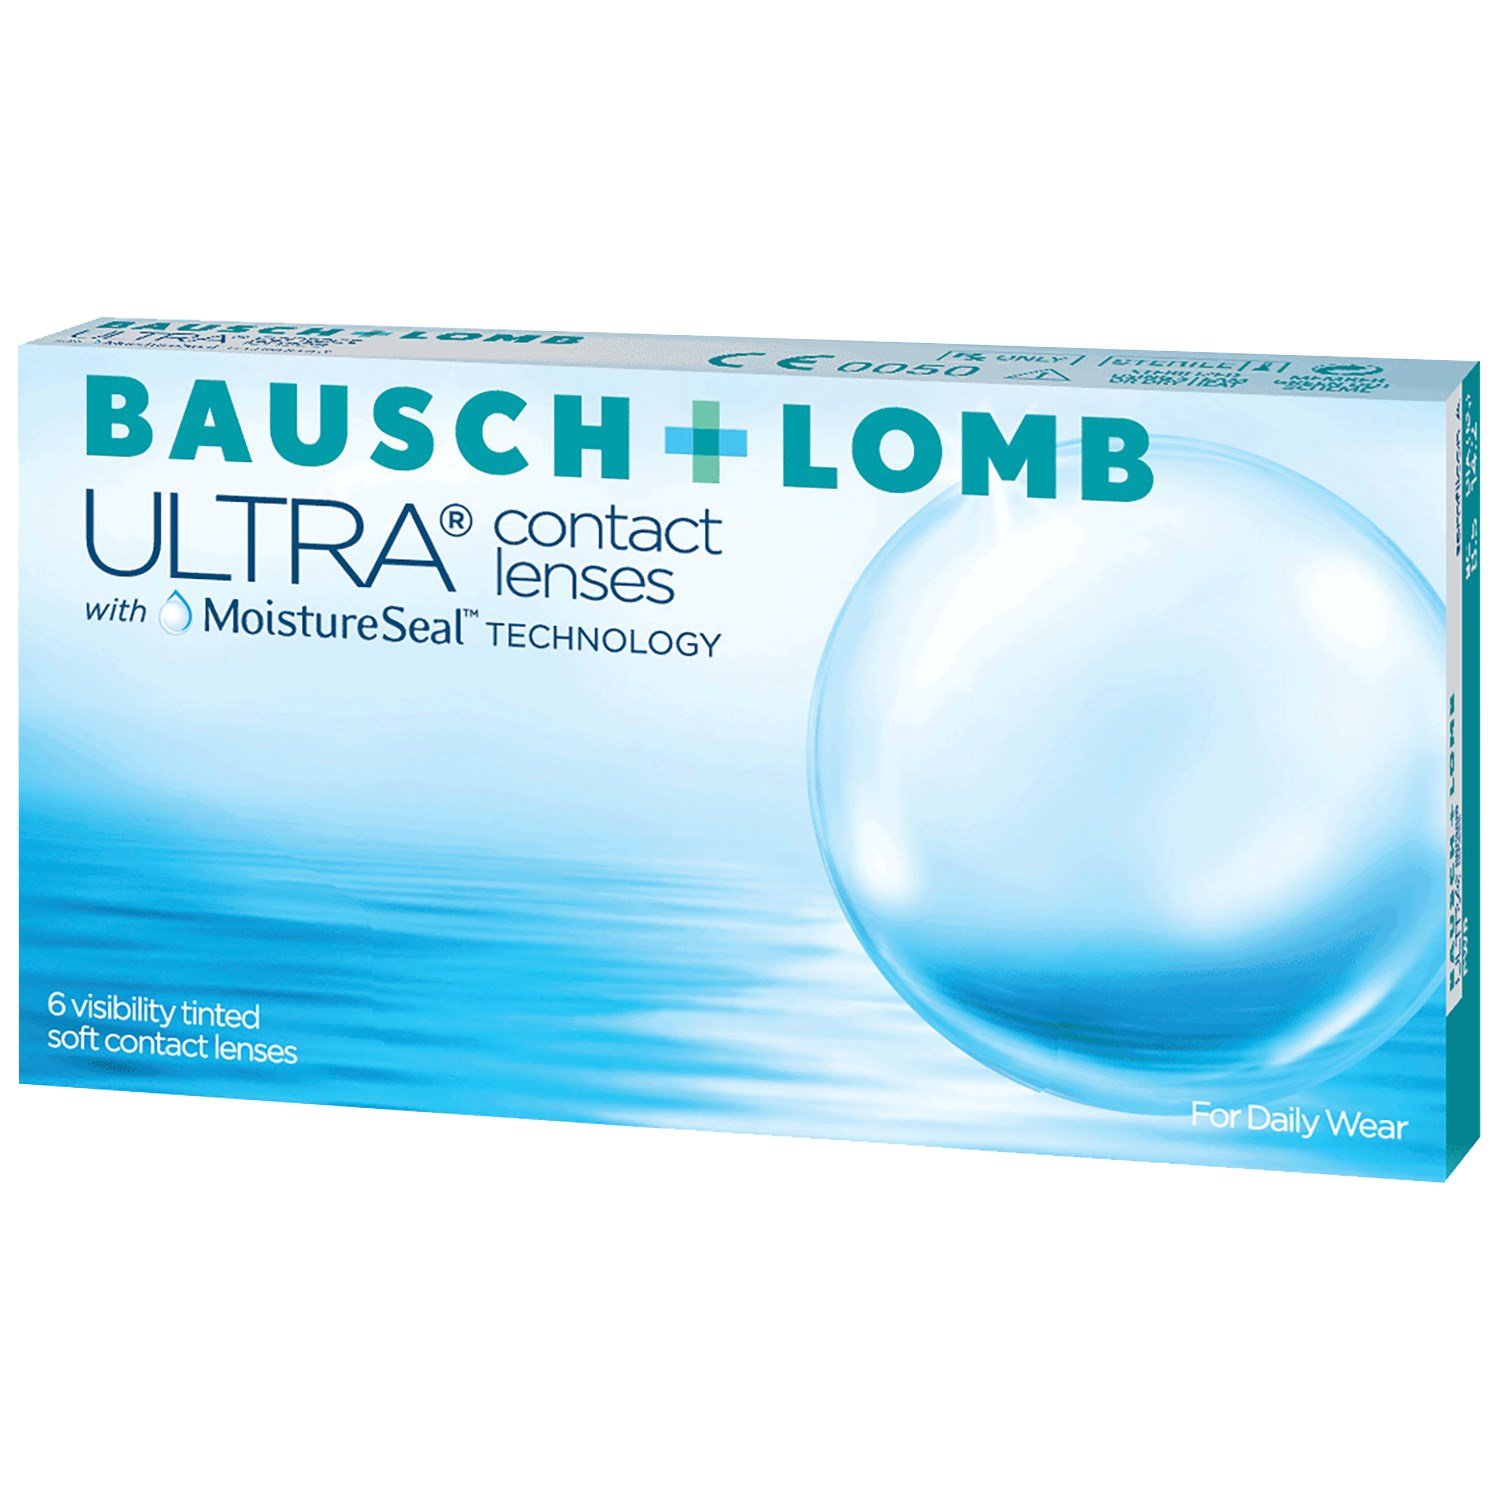 Bausch + Lomb ULTRA contact lenses